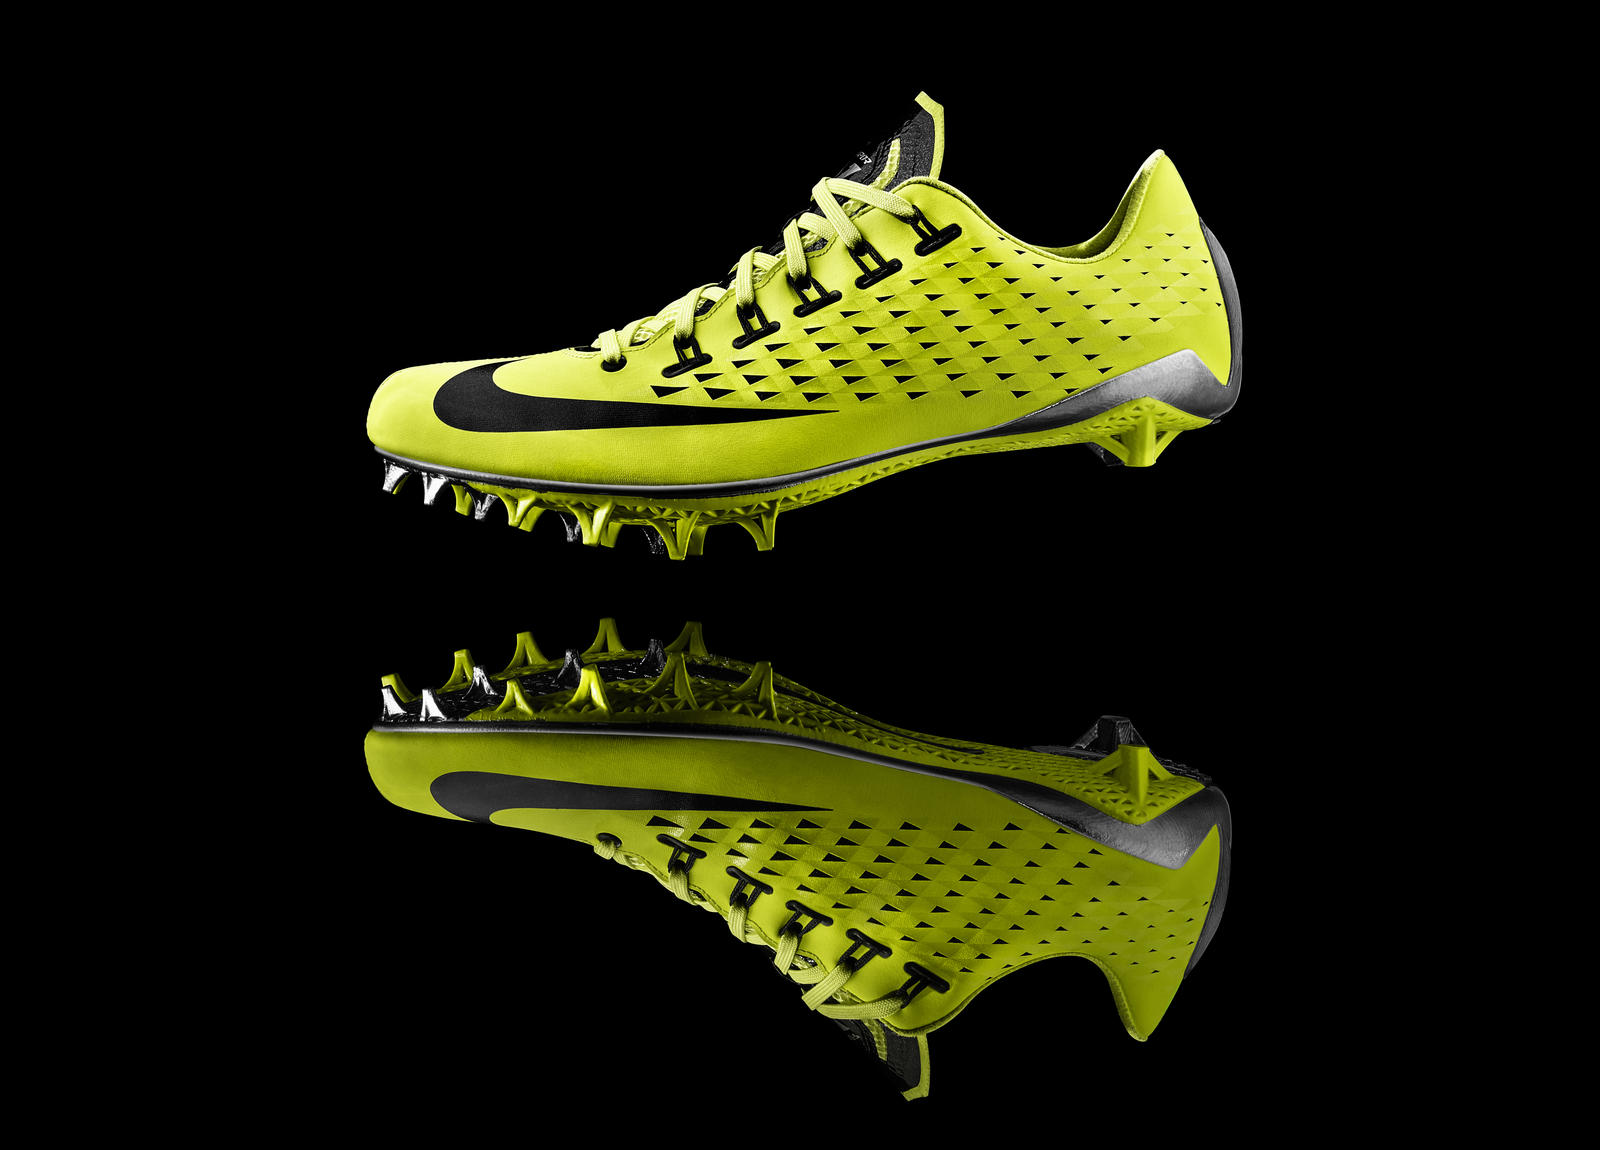   Nike Vapor Laser Talon [Source: Nike]  